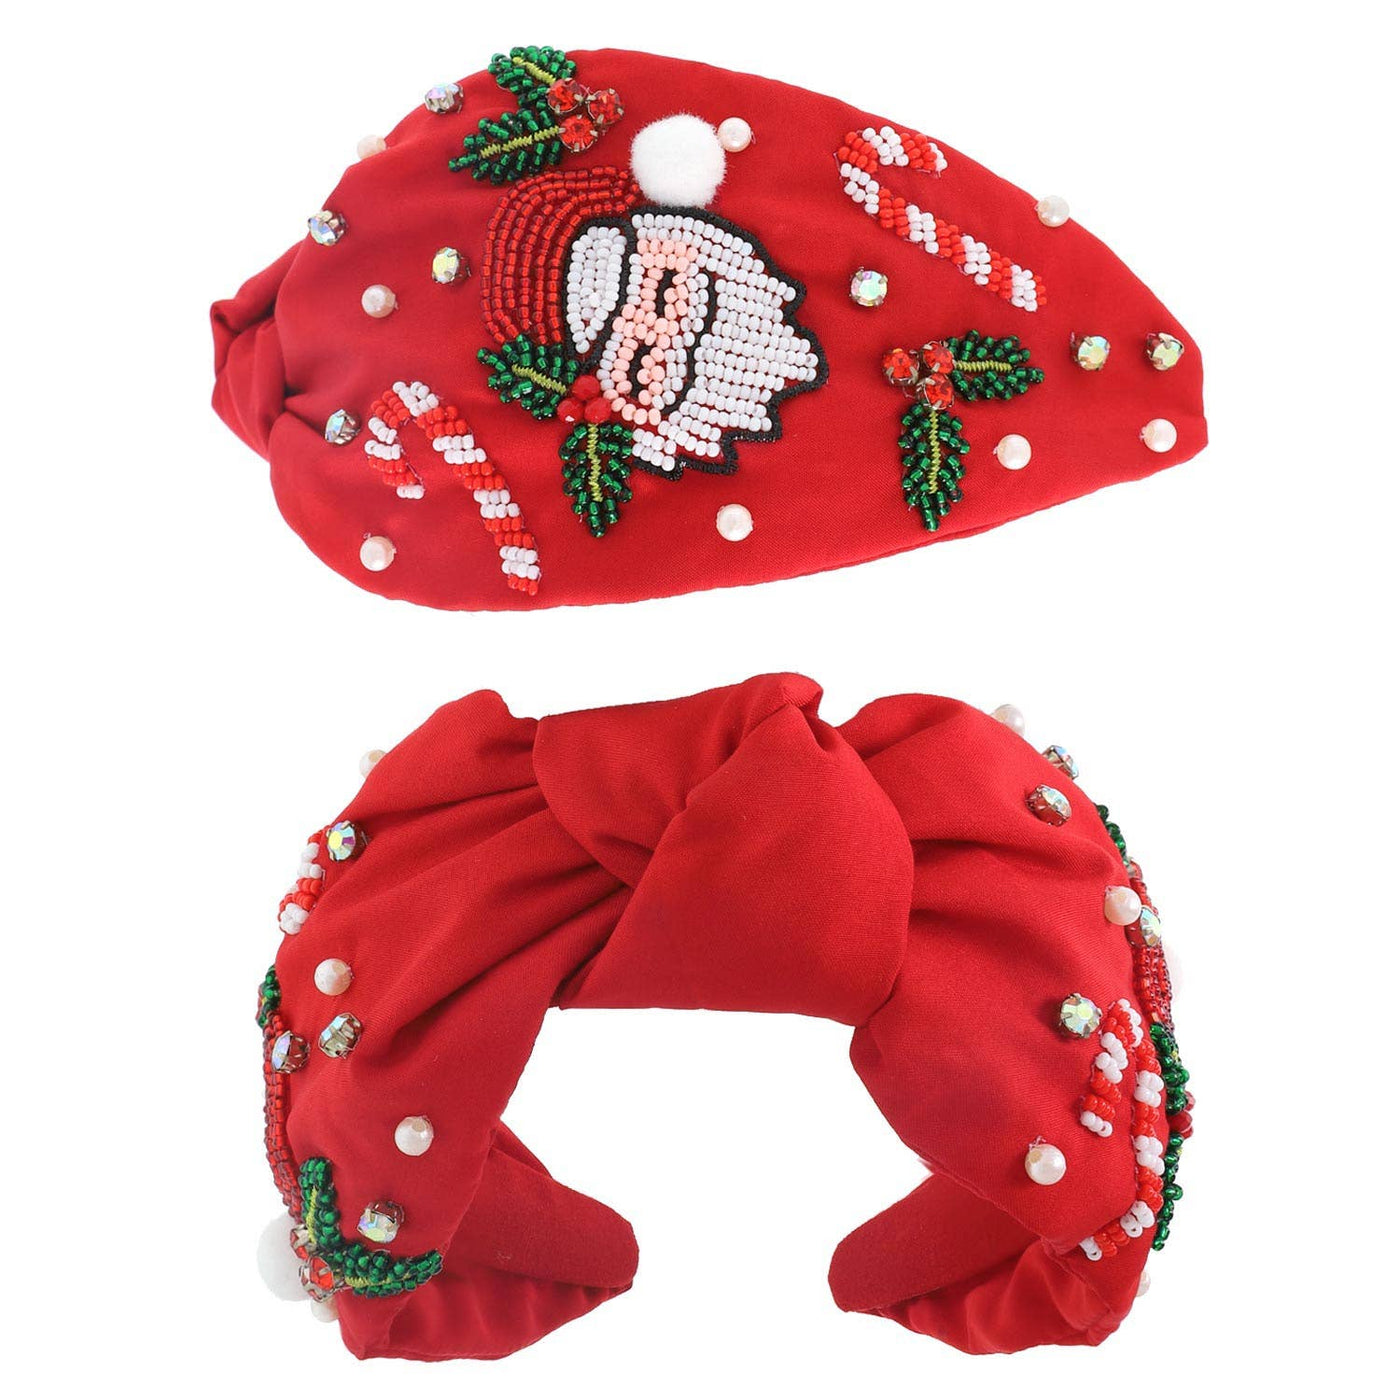 Jeweled Santa Claus Beaded Knotted Headband: Red